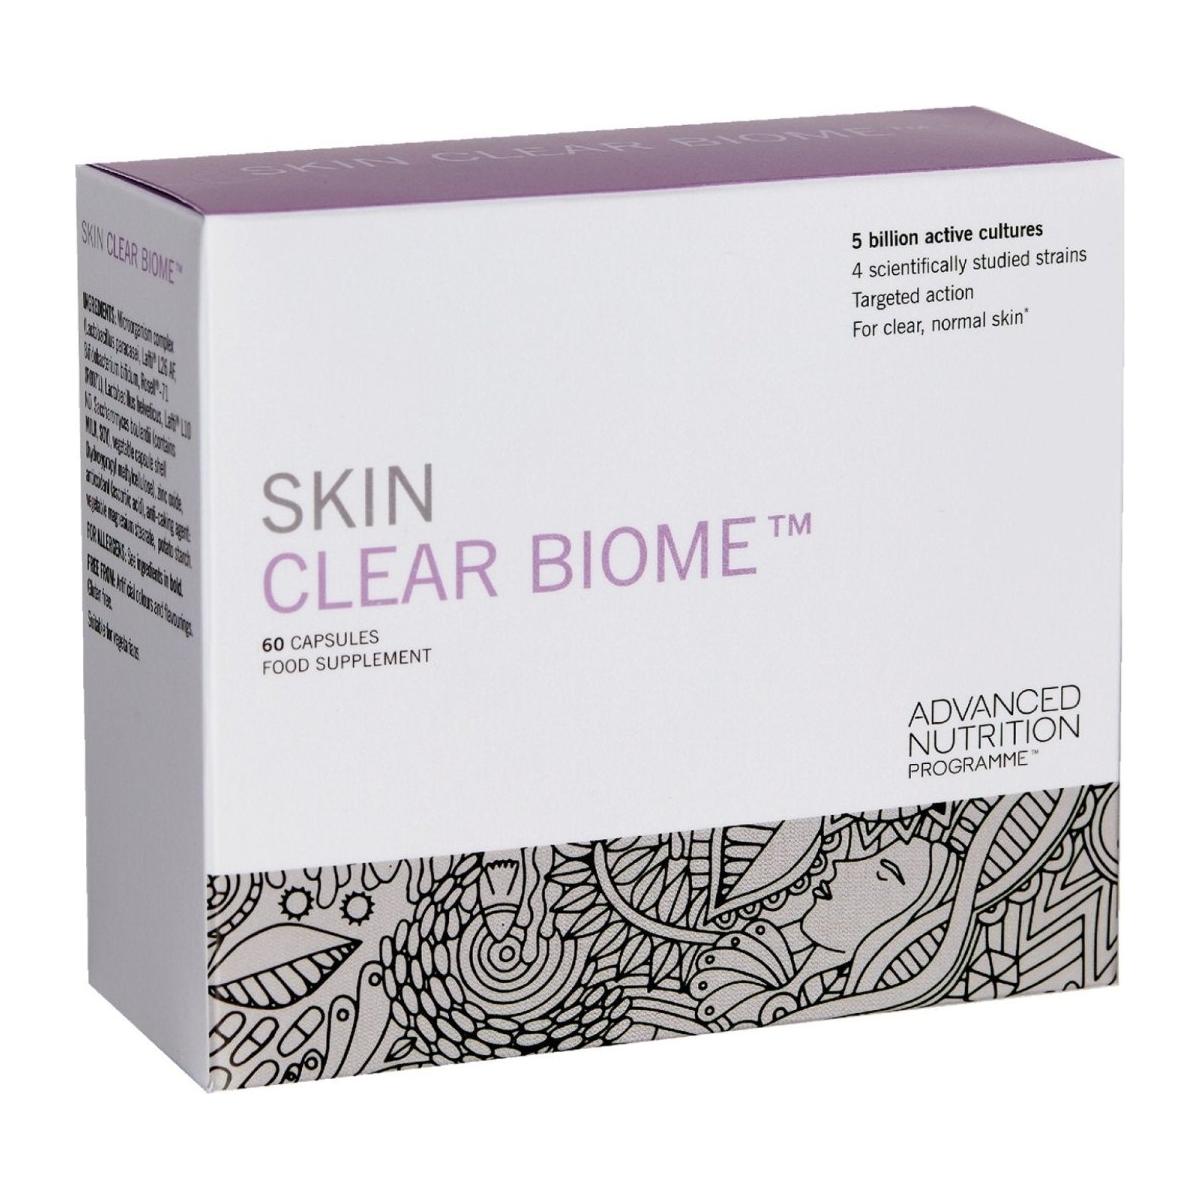 Advanced Nutrition Programme | Skin Clear Biome | 60 caps - DG International Ventures Limited